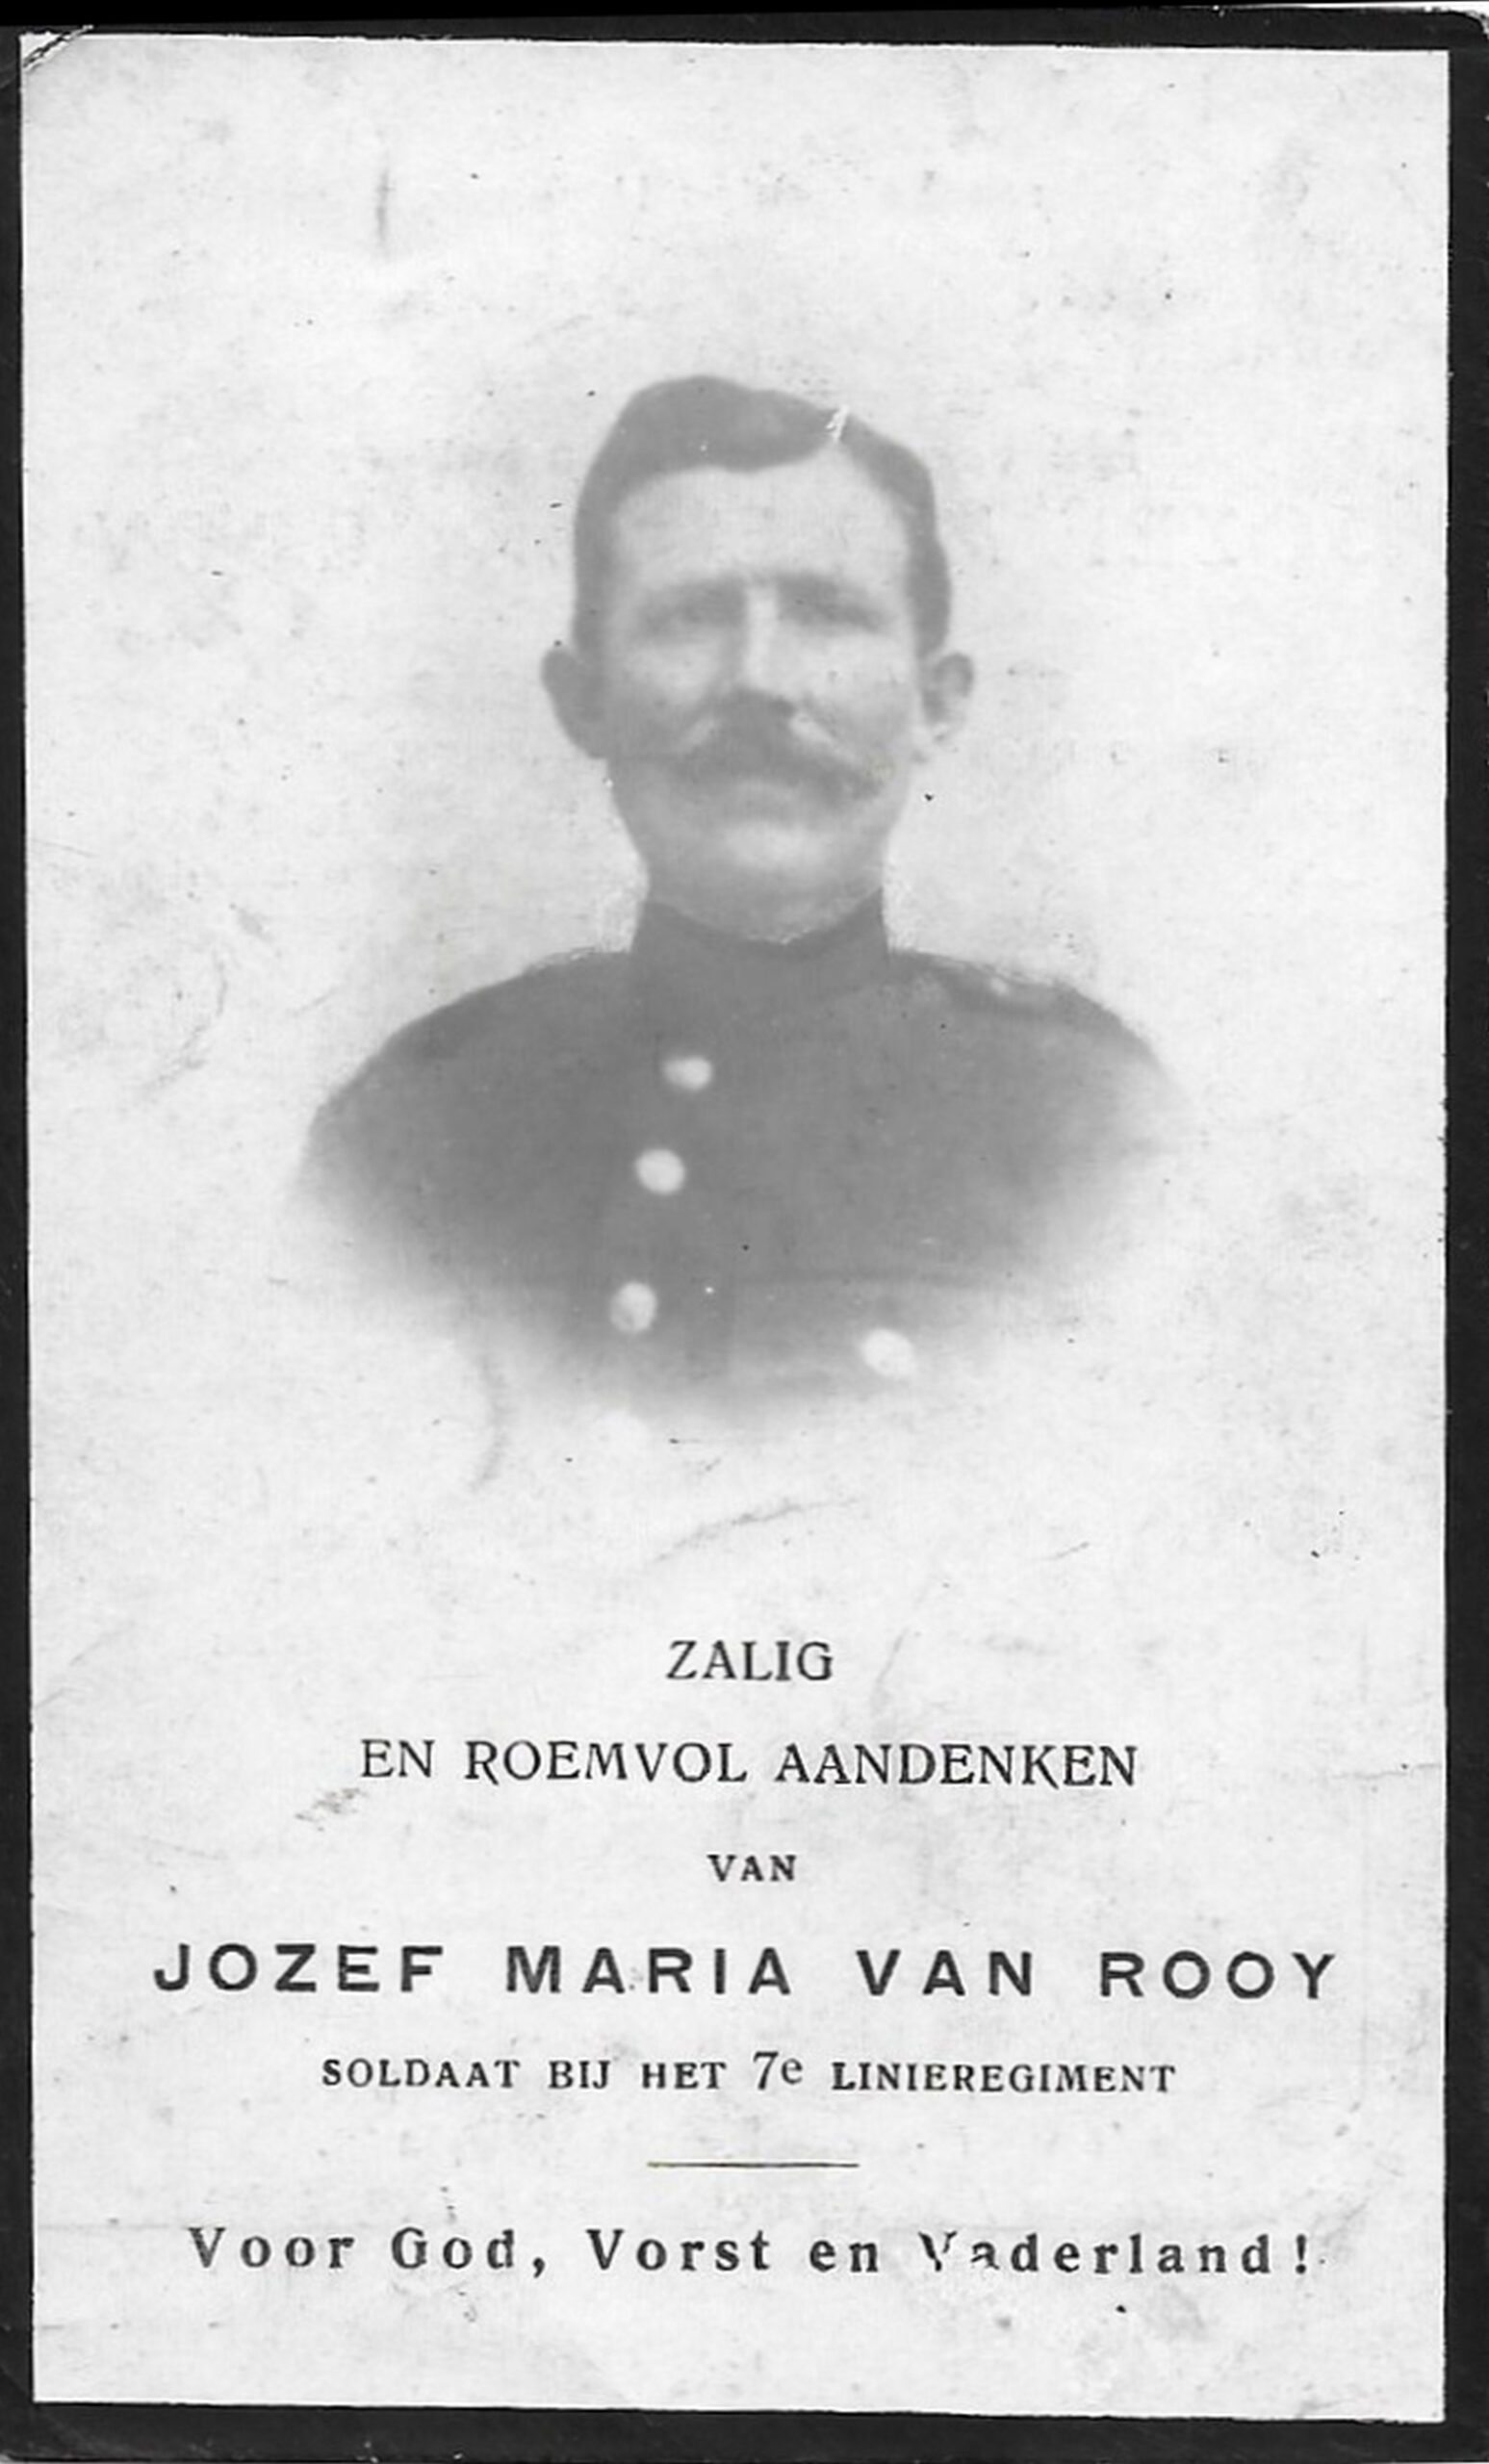 Van Rooy Joseph Marie